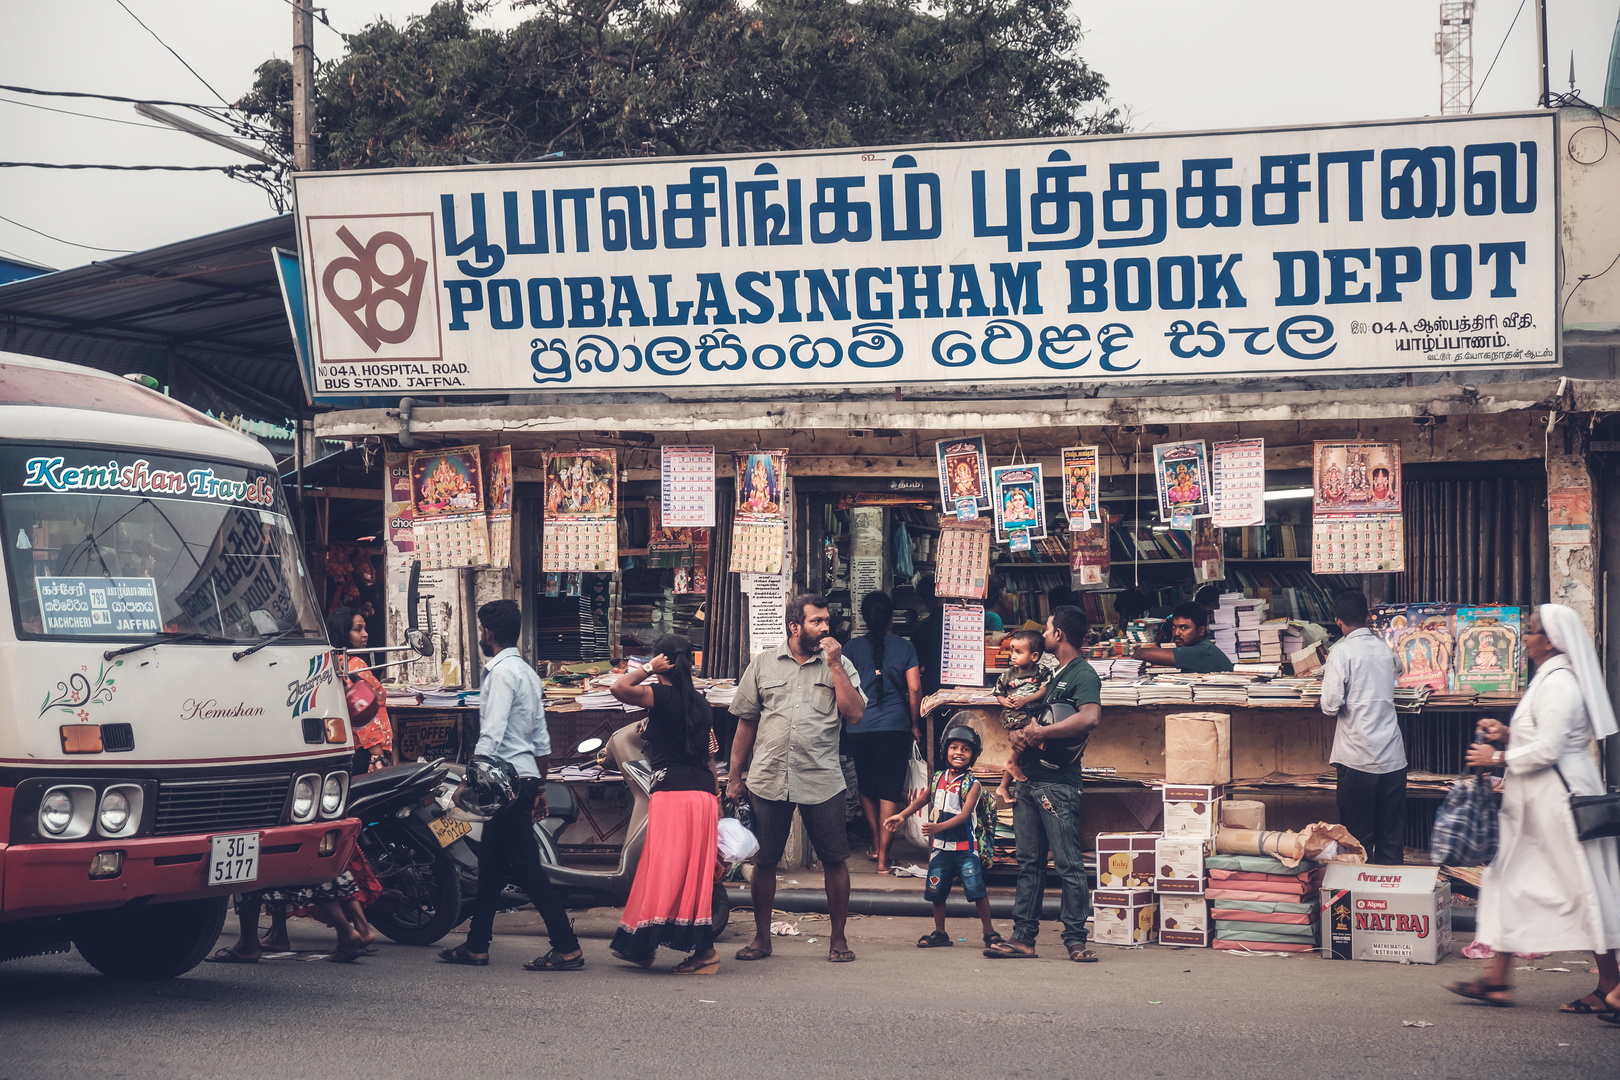 Poobalasingham Book Depot in Jaffna